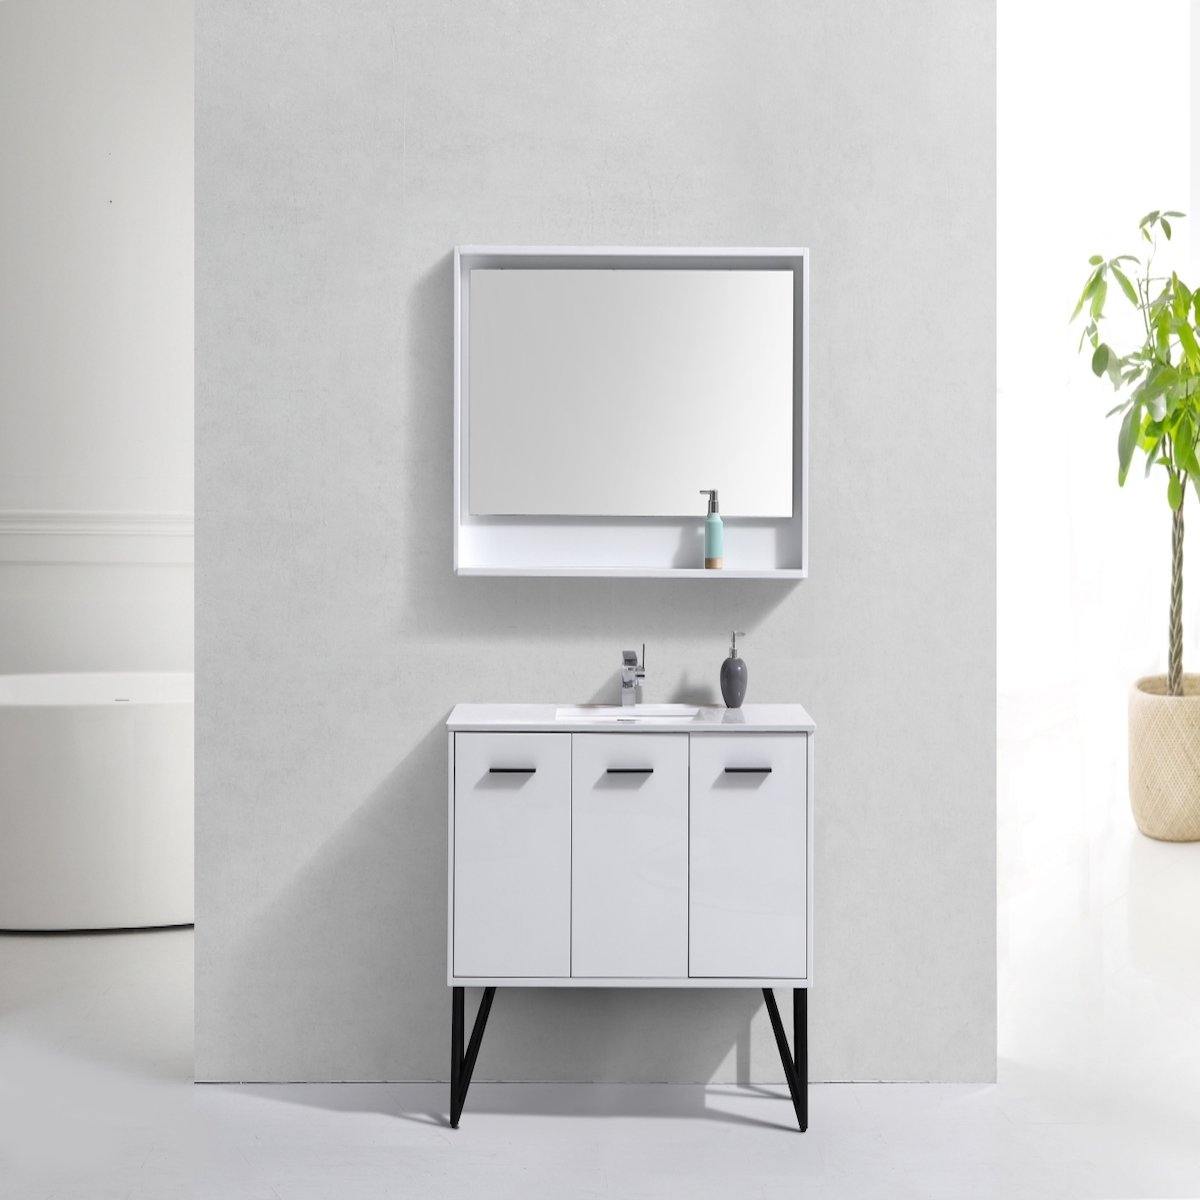 KubeBath Bosco 48" Gloss White Freestanding Single Vanity with Quartz Countertop KB48-GW in Bathroom #finish_high gloss white